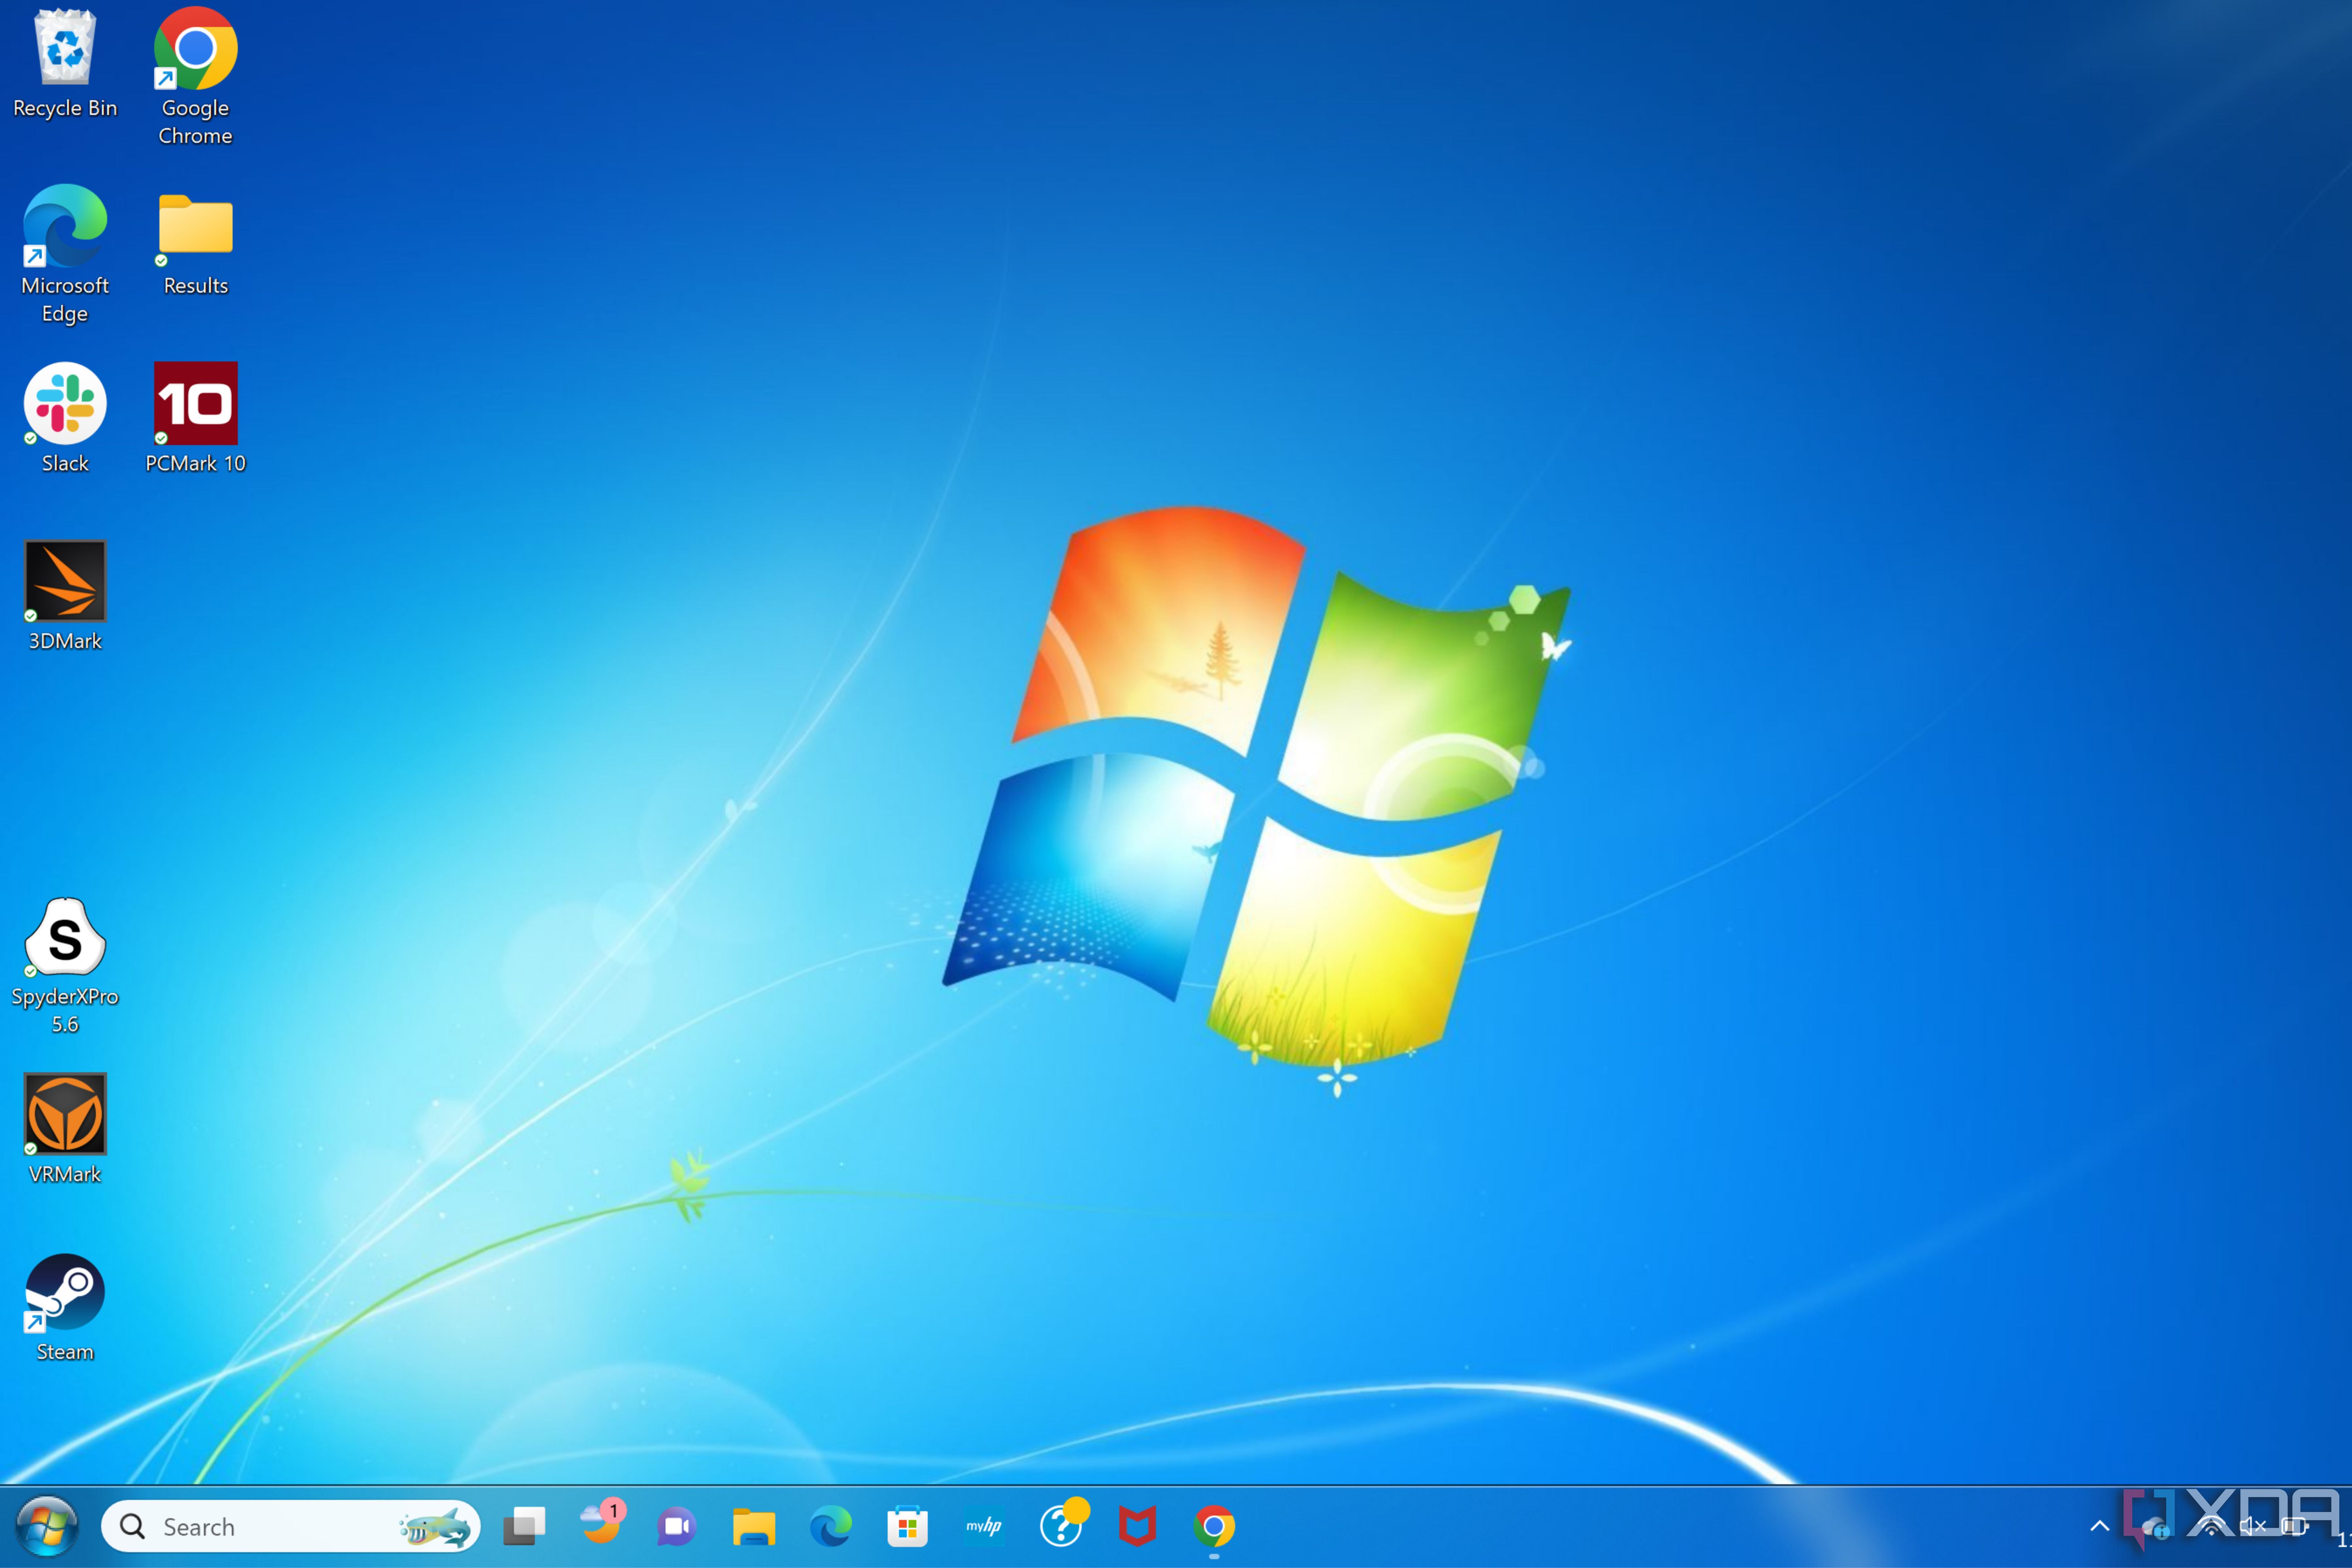 A Windows 7 skin on a Windows 11 laptop.